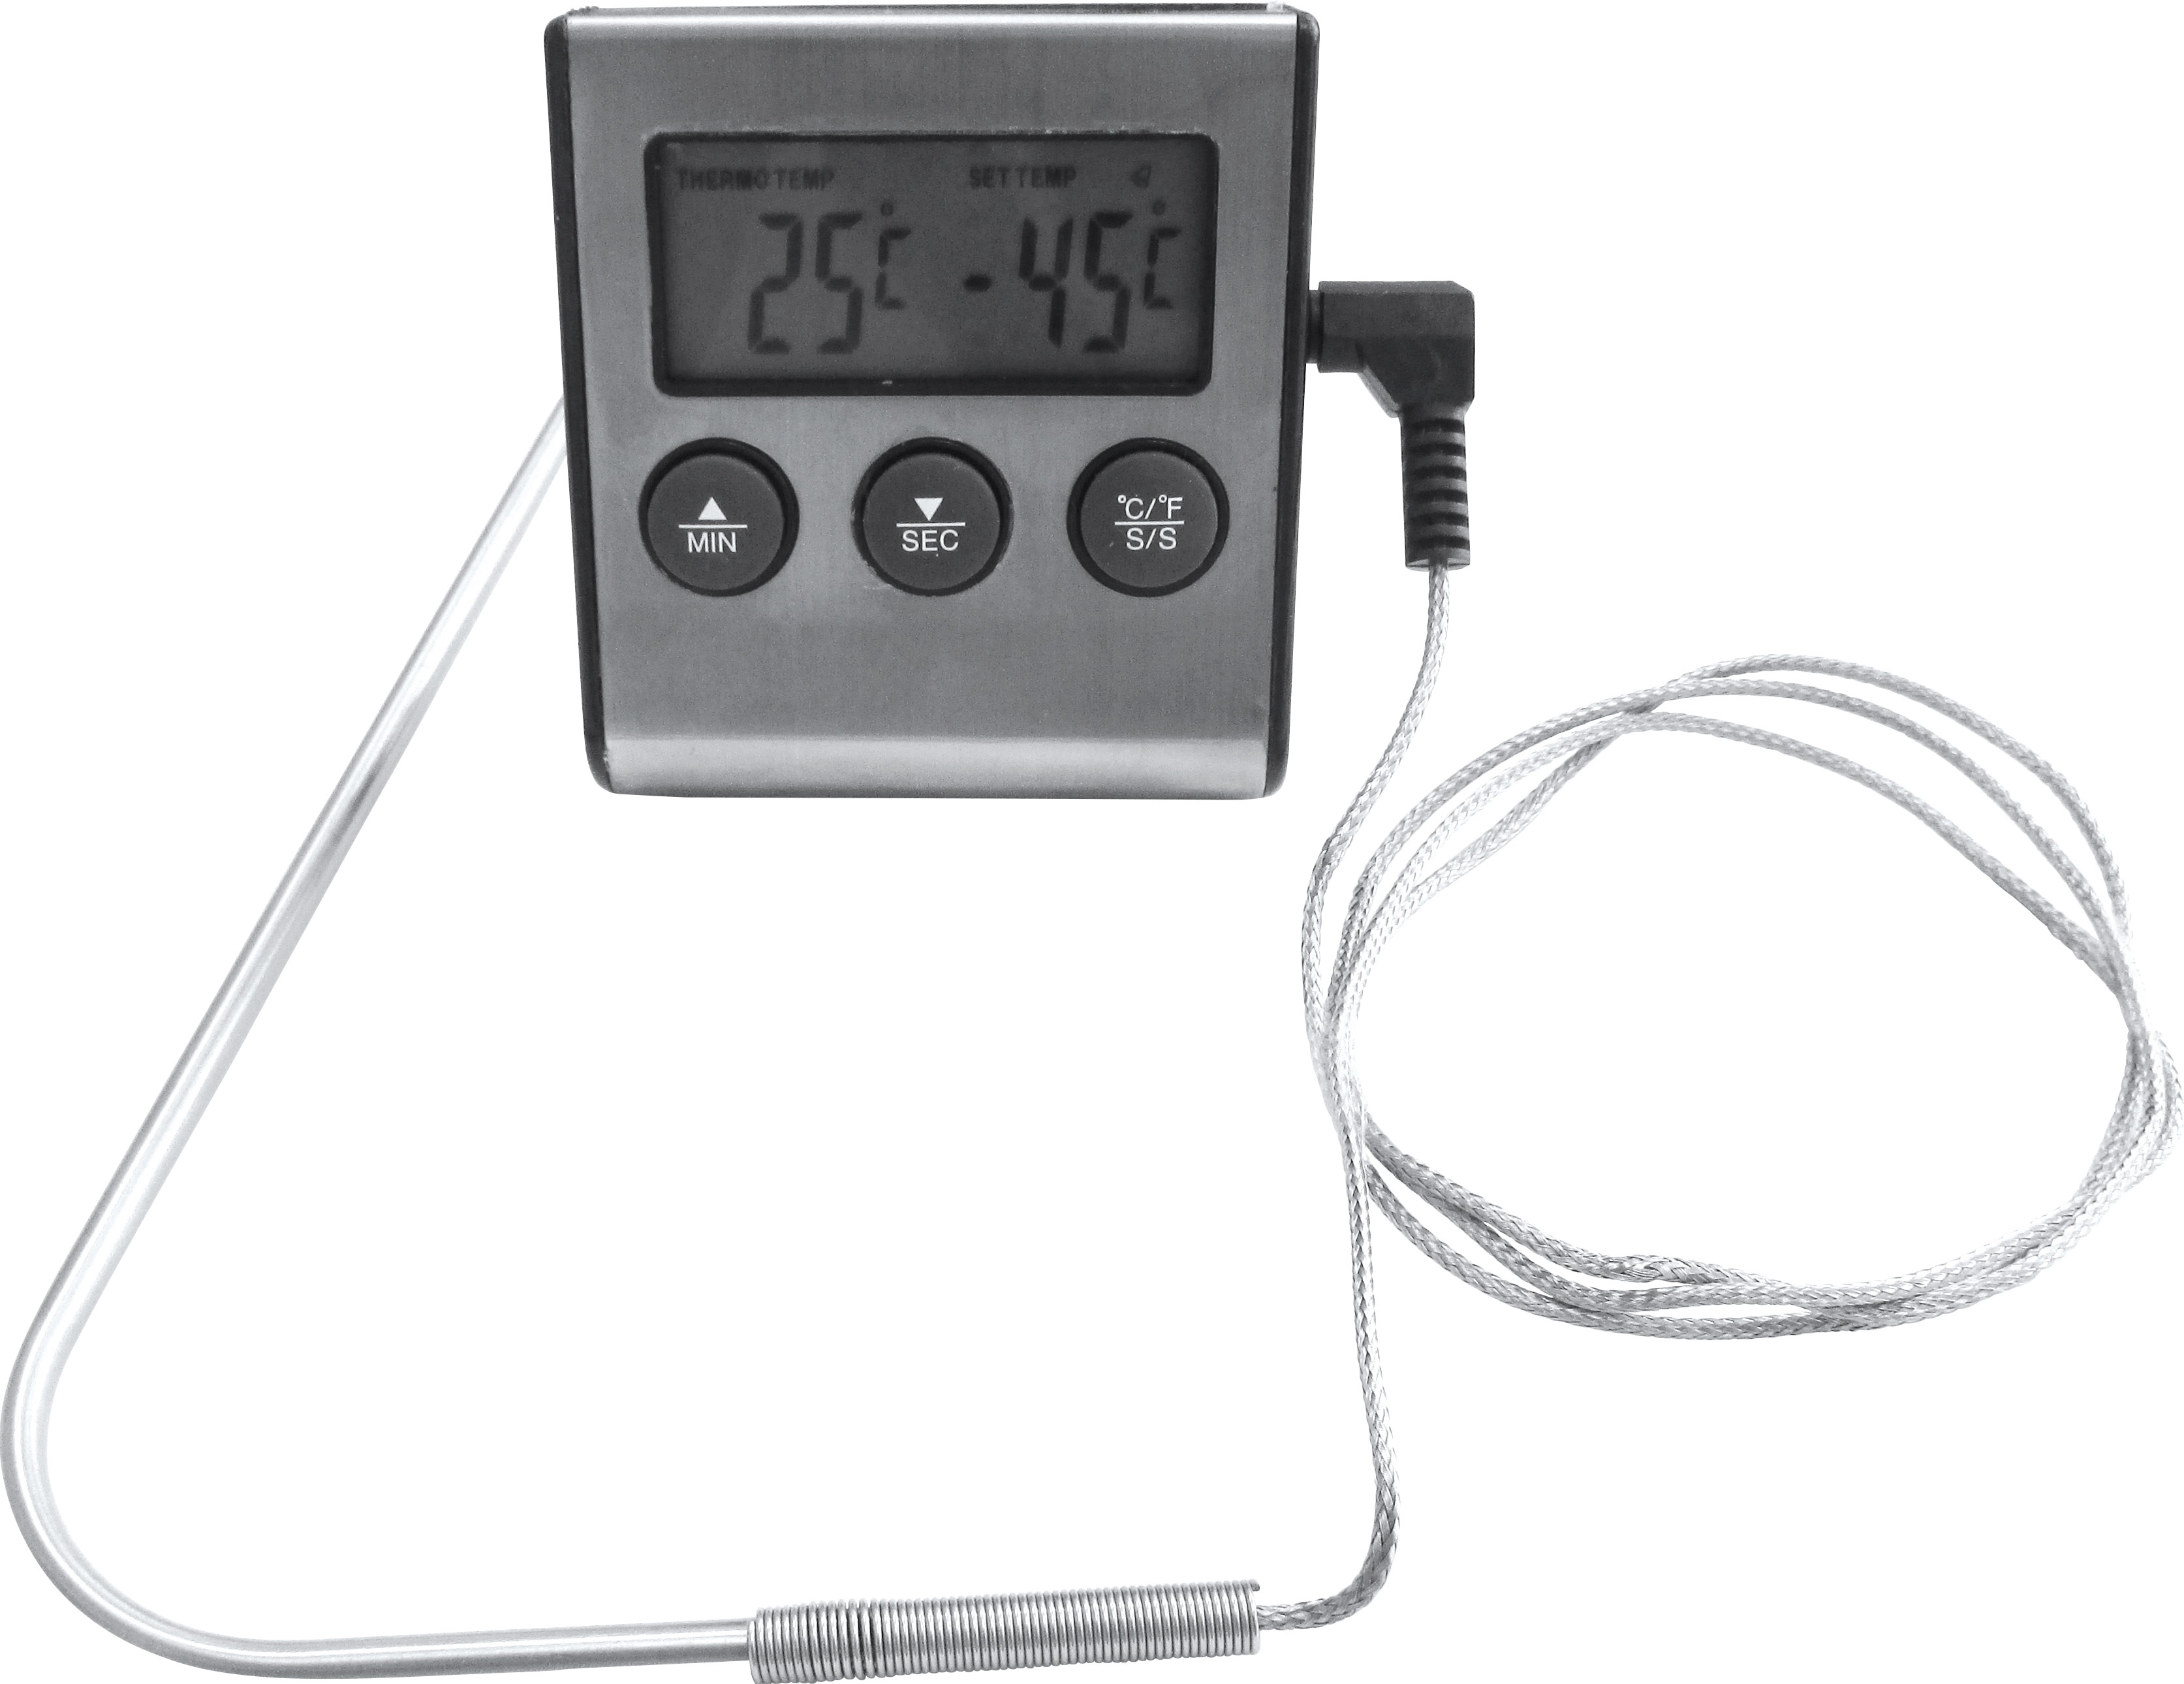 OBI Digital Grill-Bratenthermometer kaufen bei Tepro